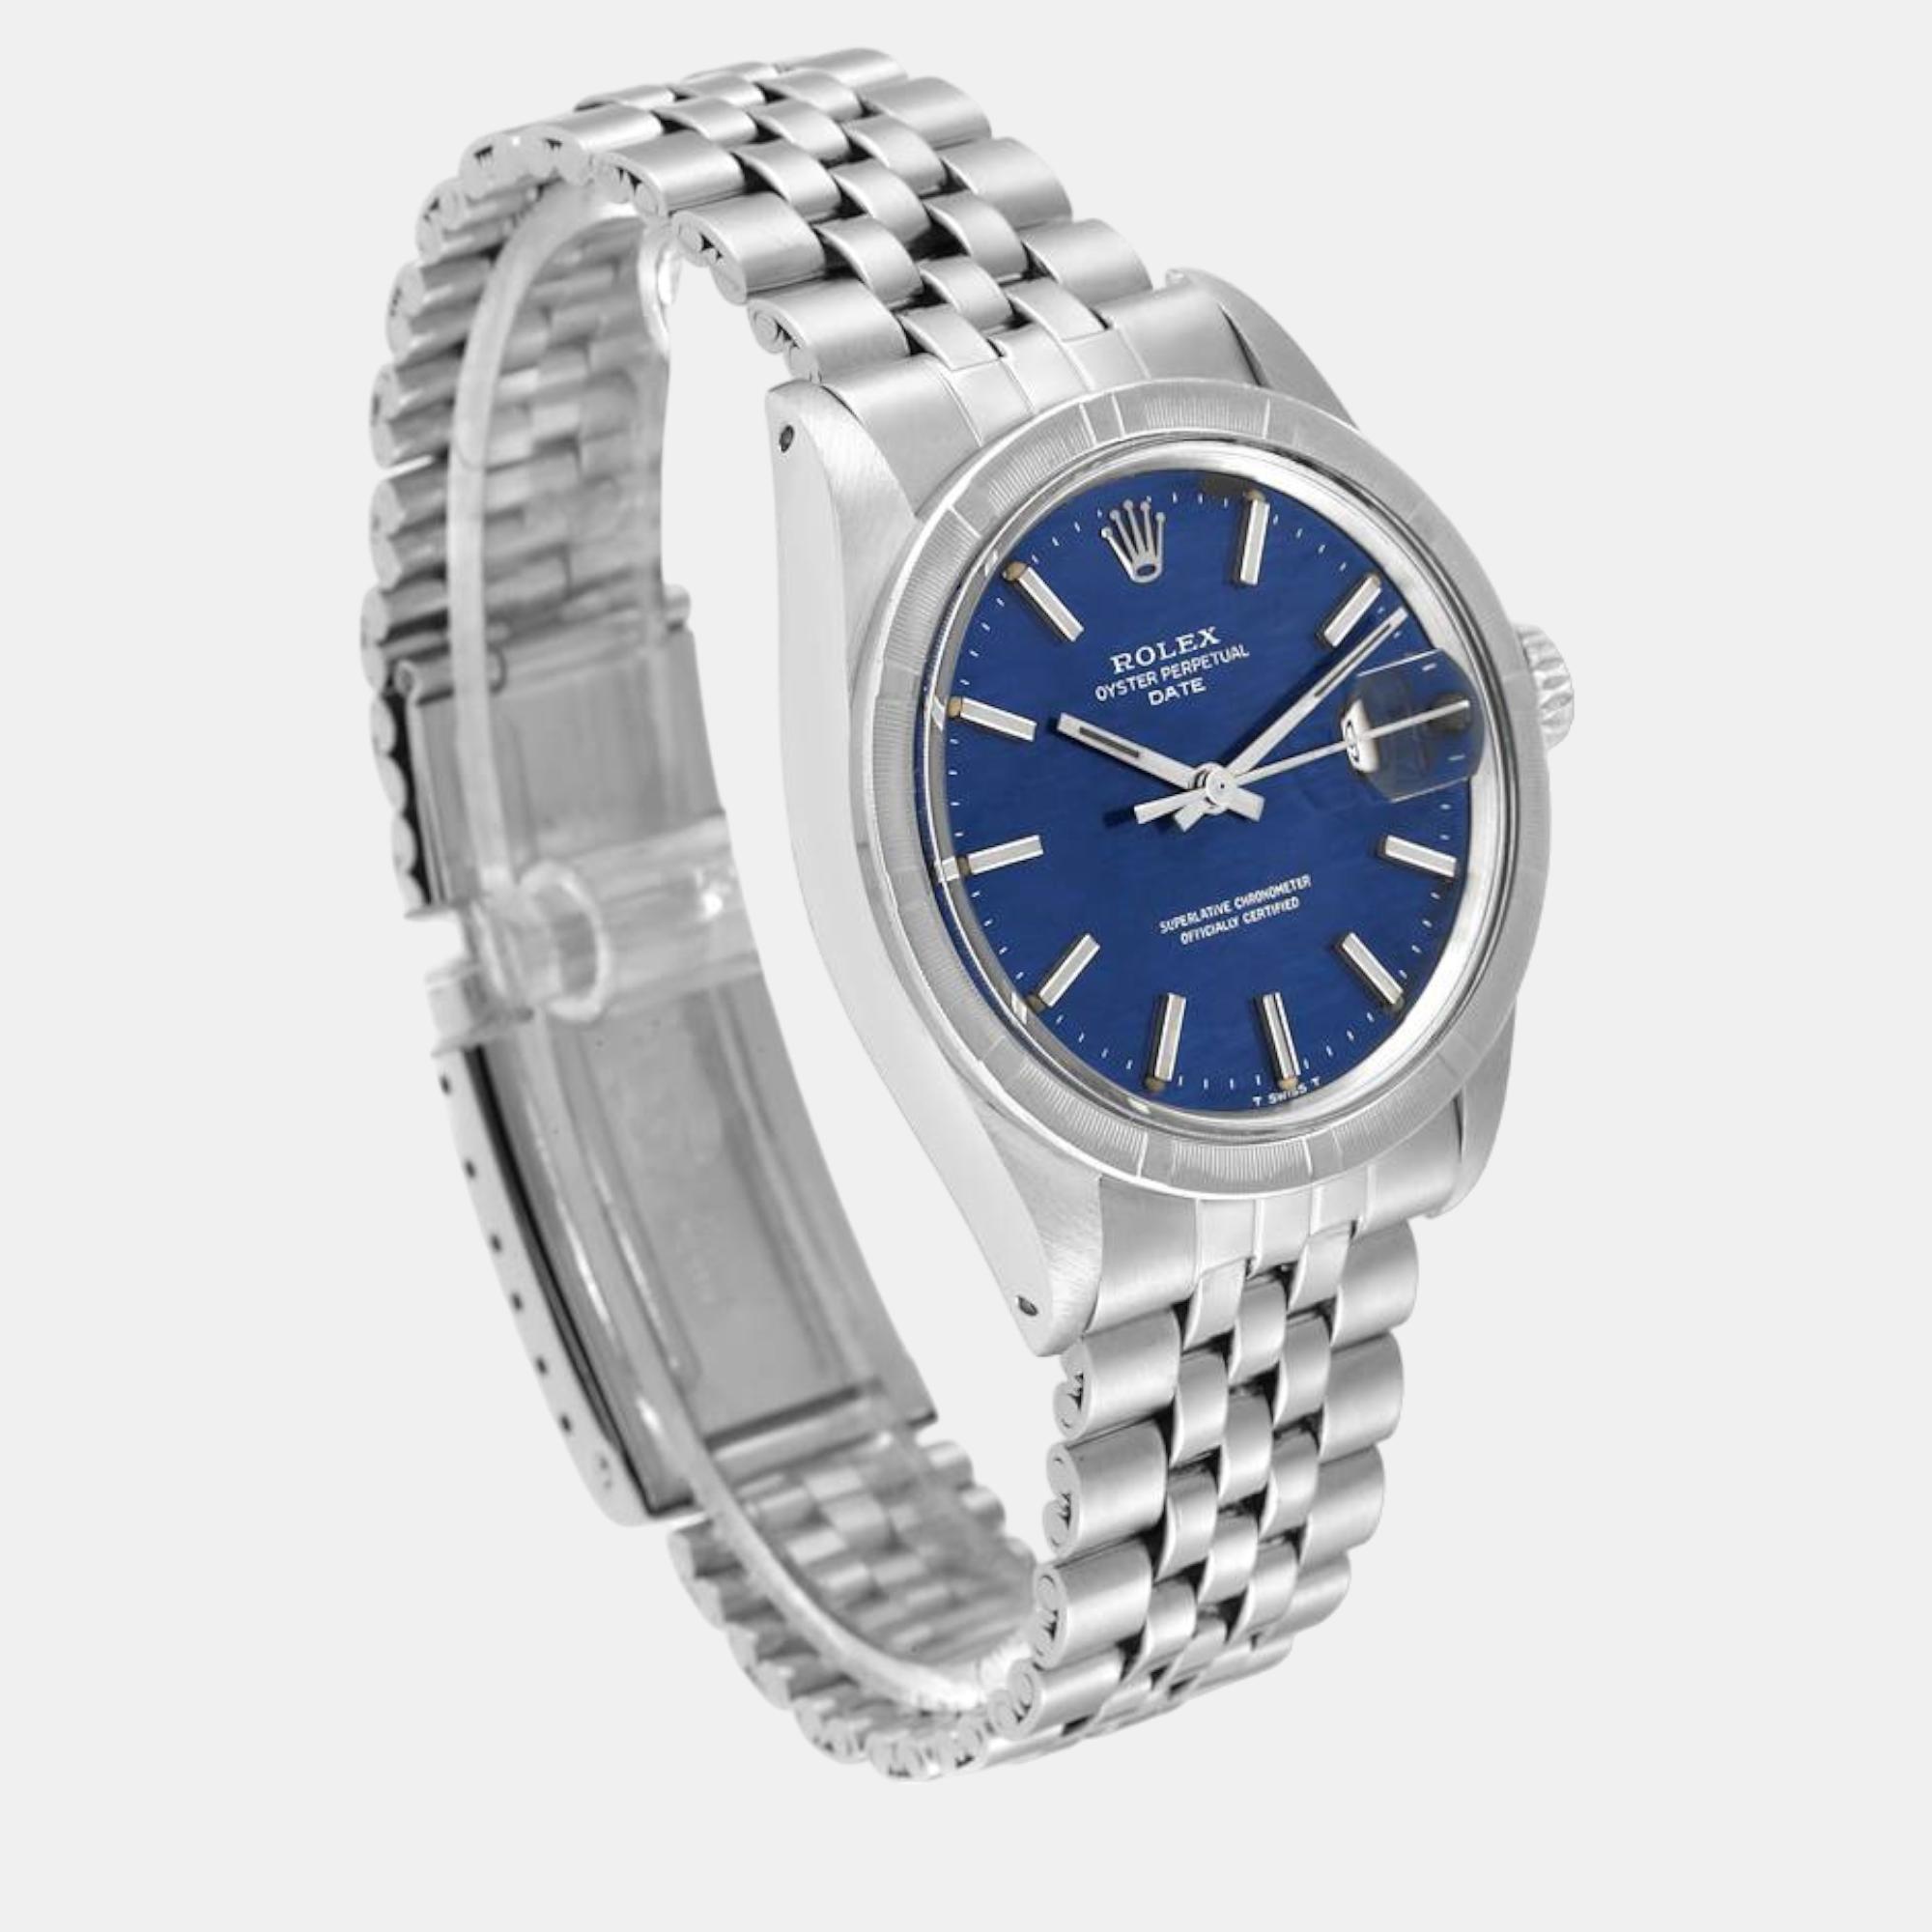 Rolex Date Blue Brick Dial Engine Turned Bezel Vintage Steel Men's Watch 1501 35 Mm